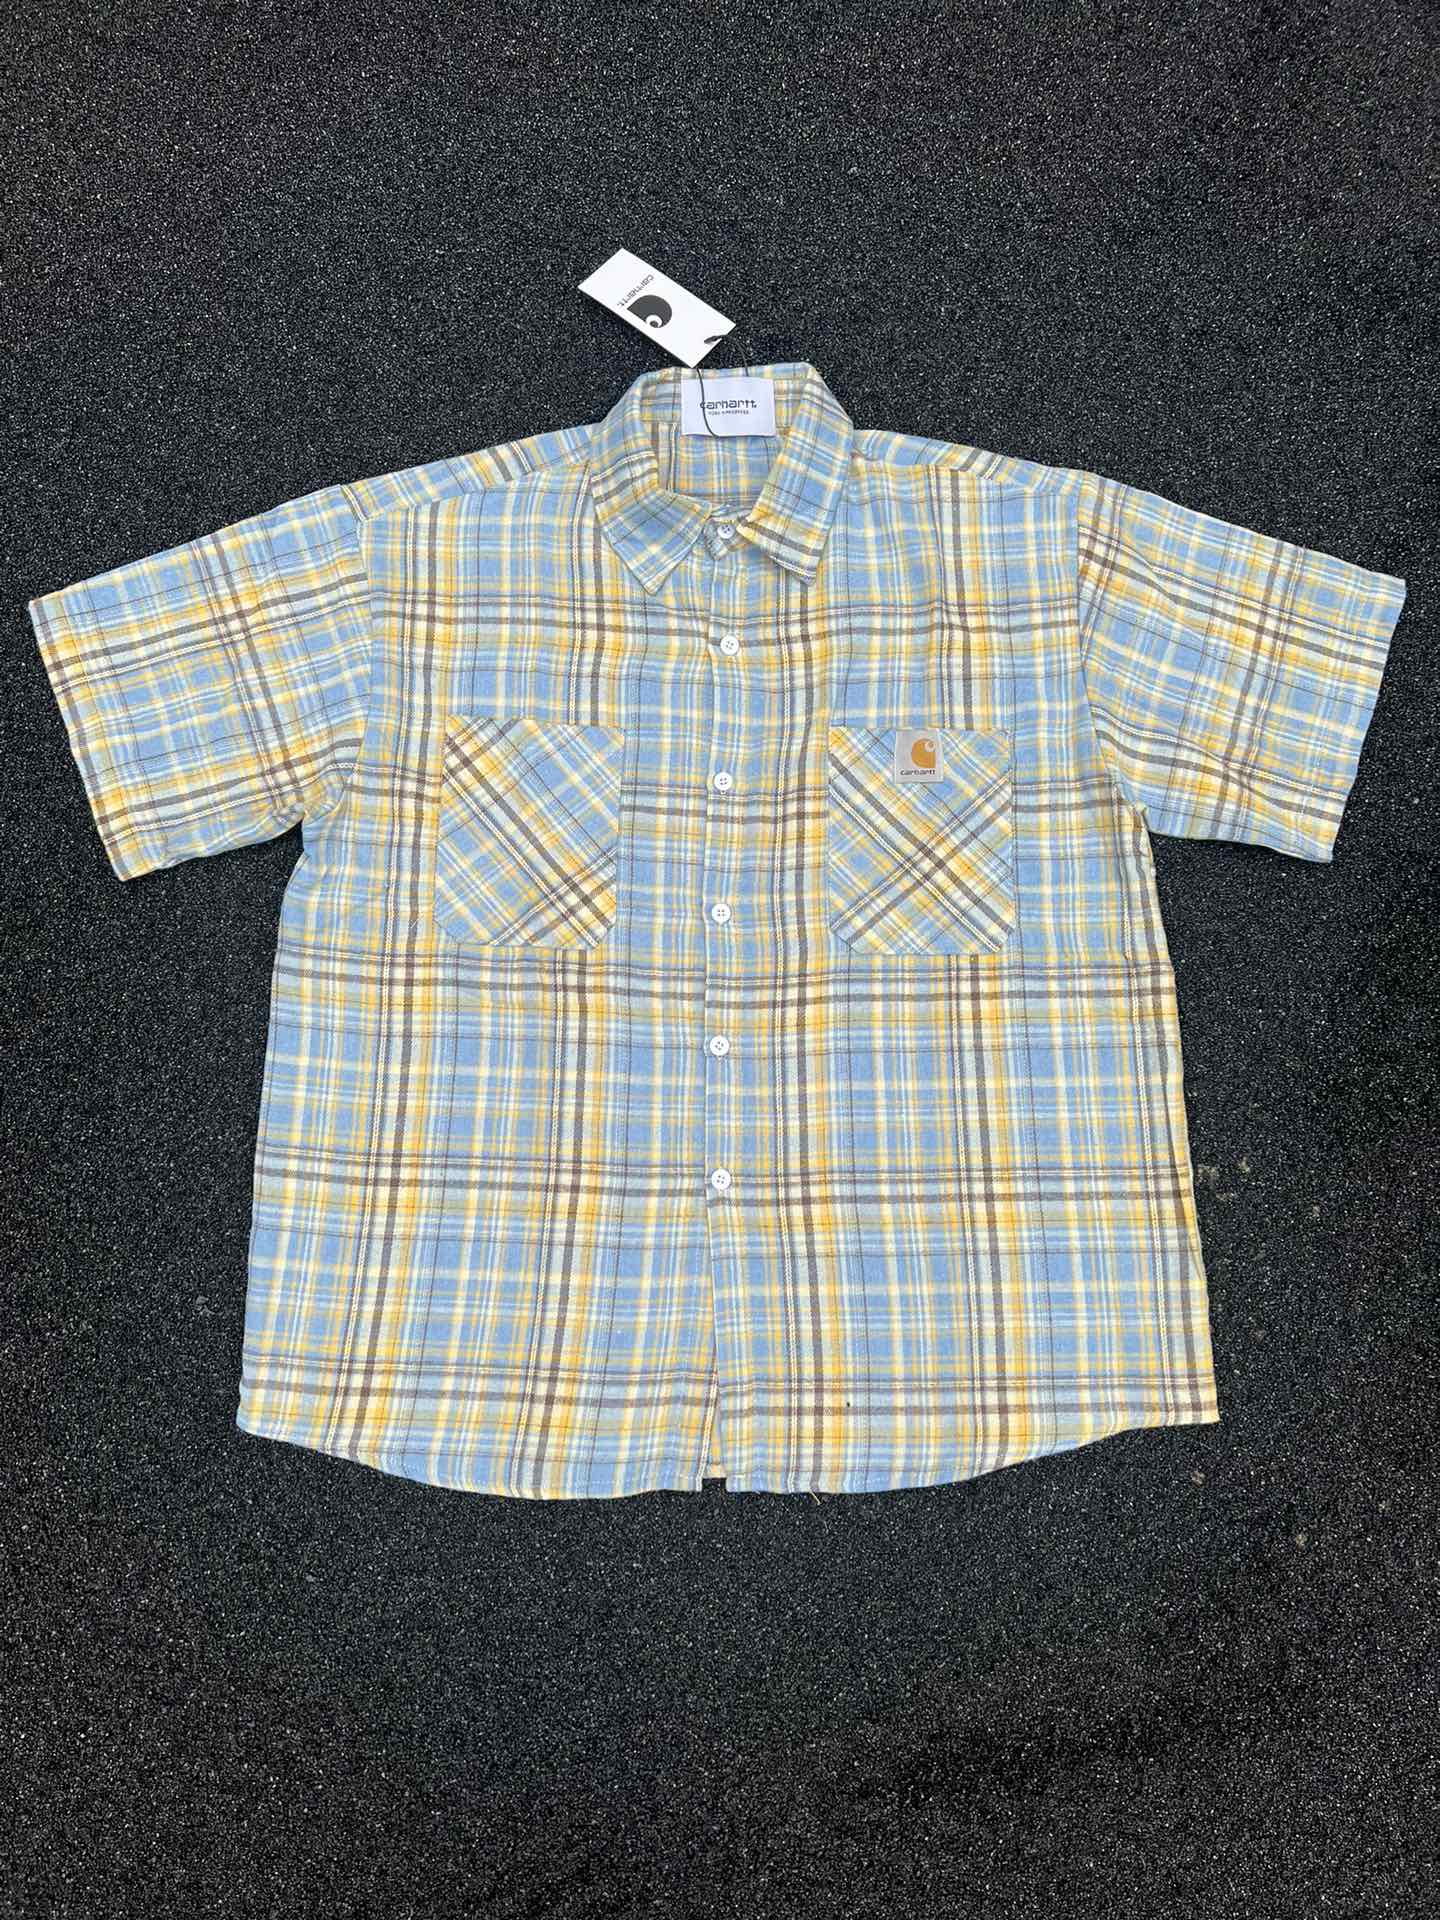 Carhartt Clothing Shirts & Blouses T-Shirt Yellow Unisex Cotton Short Sleeve